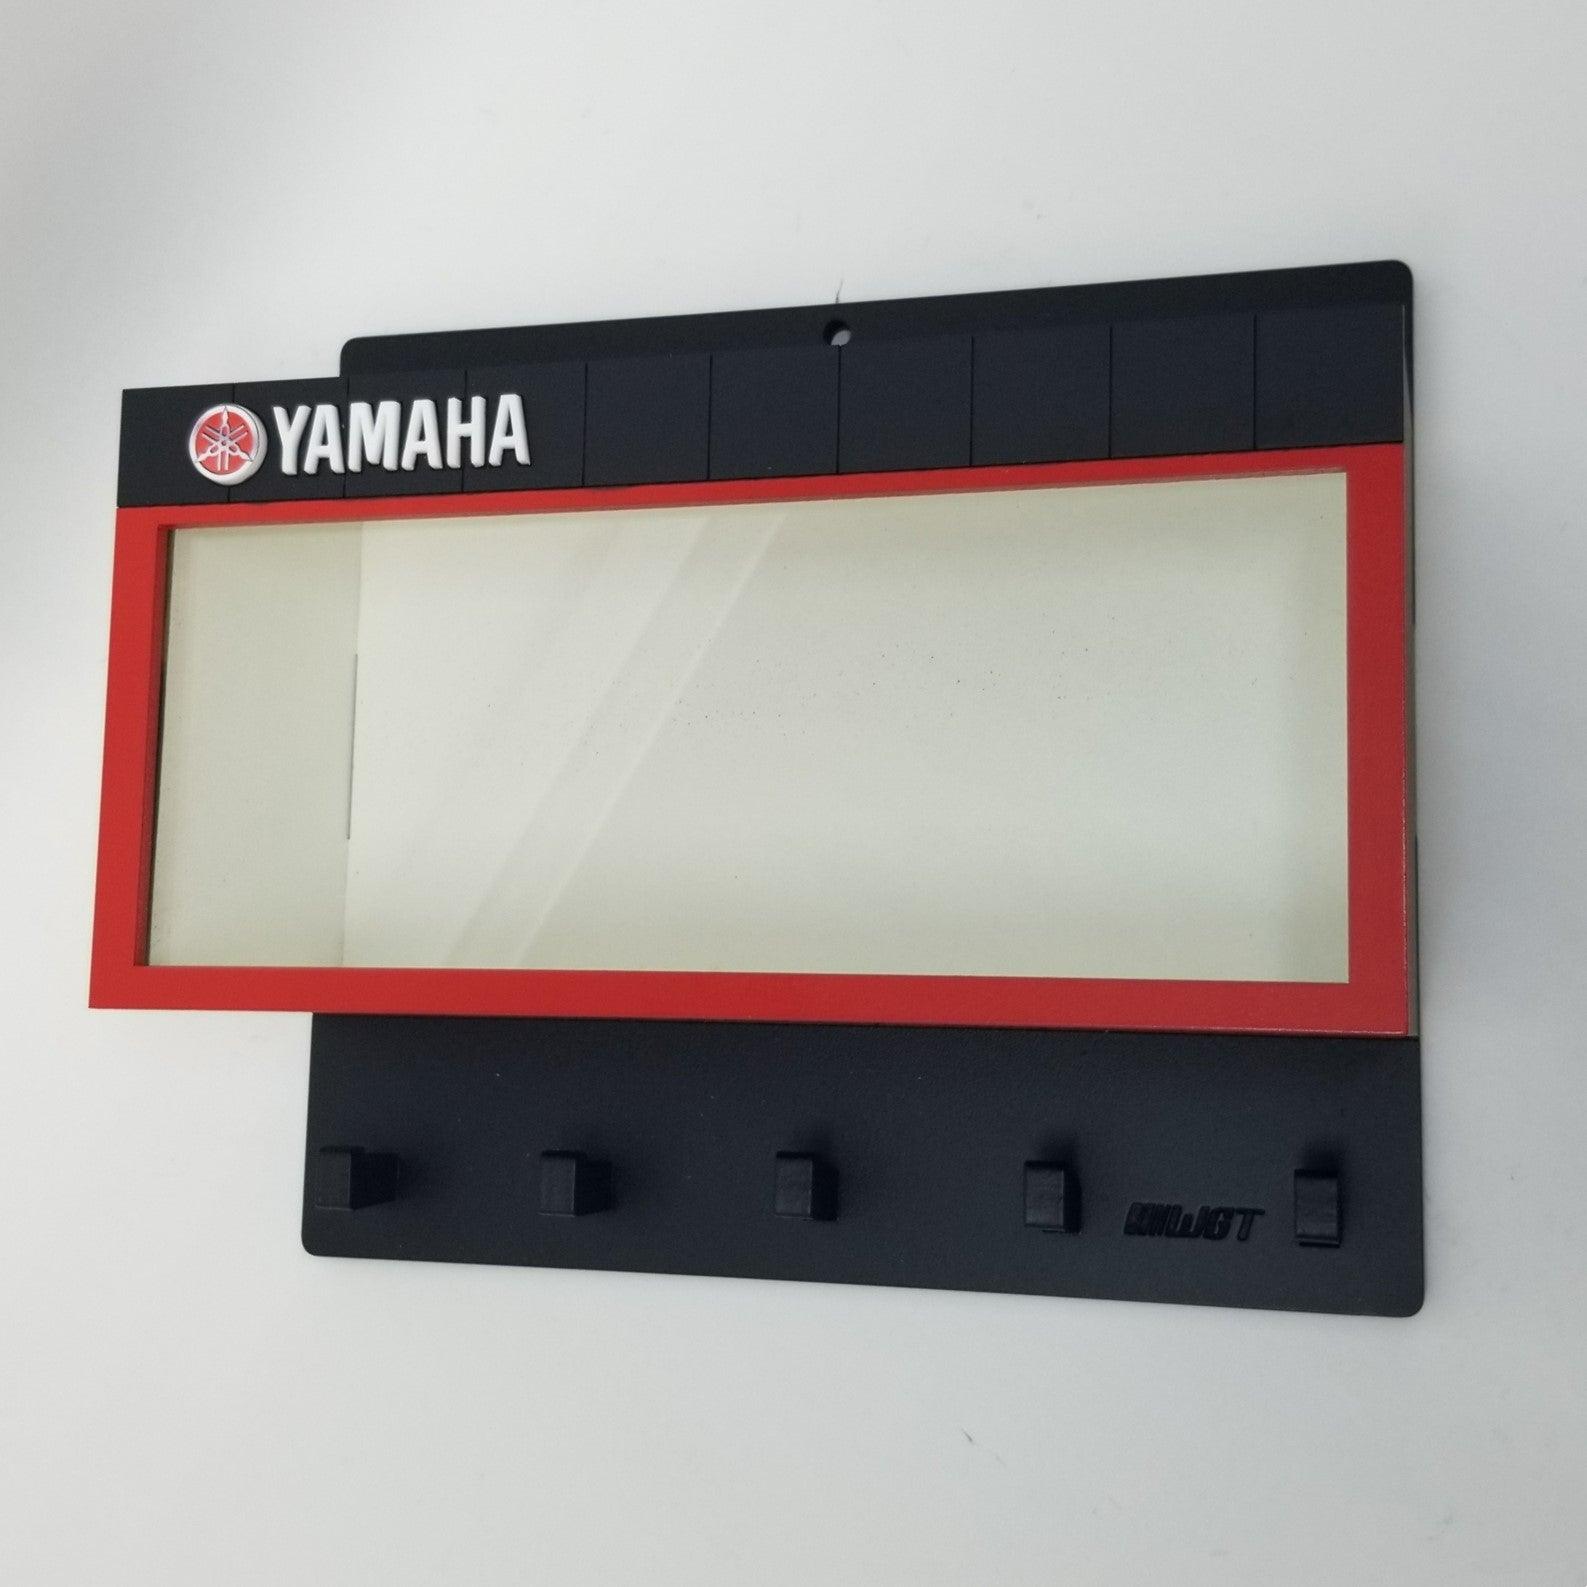 Yamaha Dealership Wall Key Hook Rack - Exclusive item - Handcrafted Key Holder - Brazilian Shop